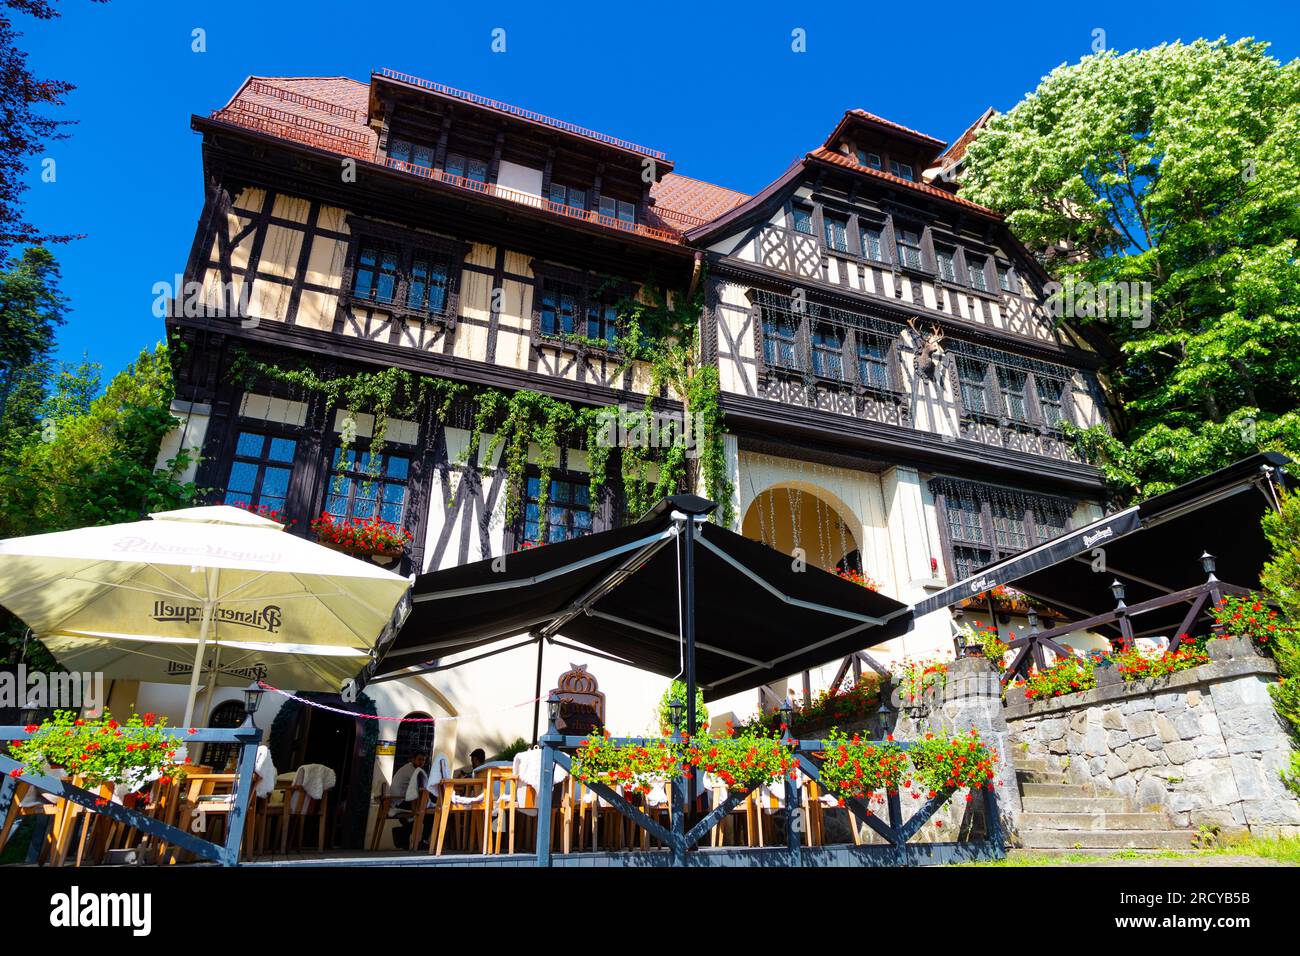 Half-timbered, alpine style building at Peles Castle housing the Carol Gastro Bierhaus restaurant, Sinaia, Romania Stock Photo